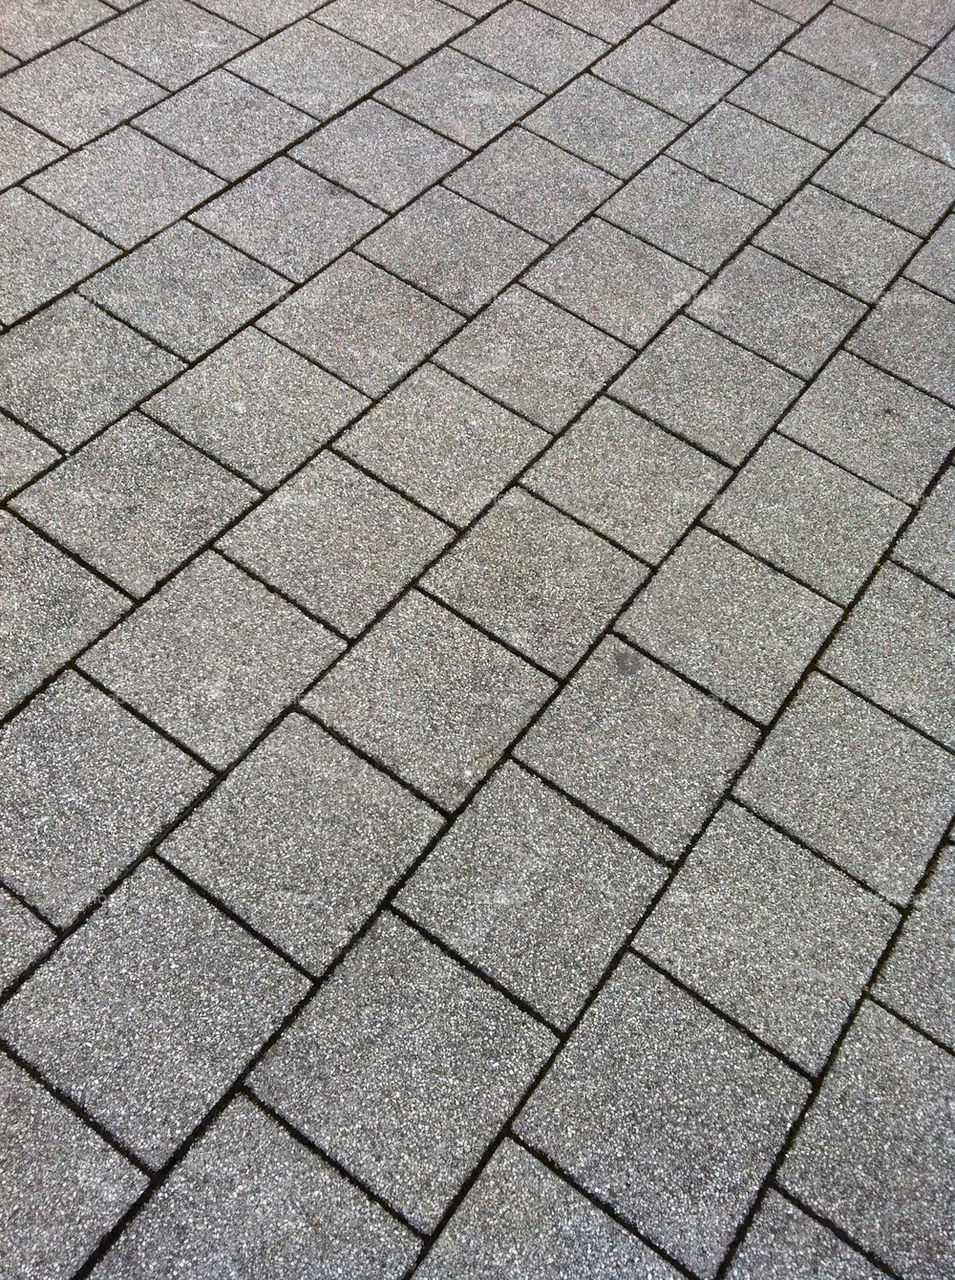 street pattern gray stone by x-maria-x